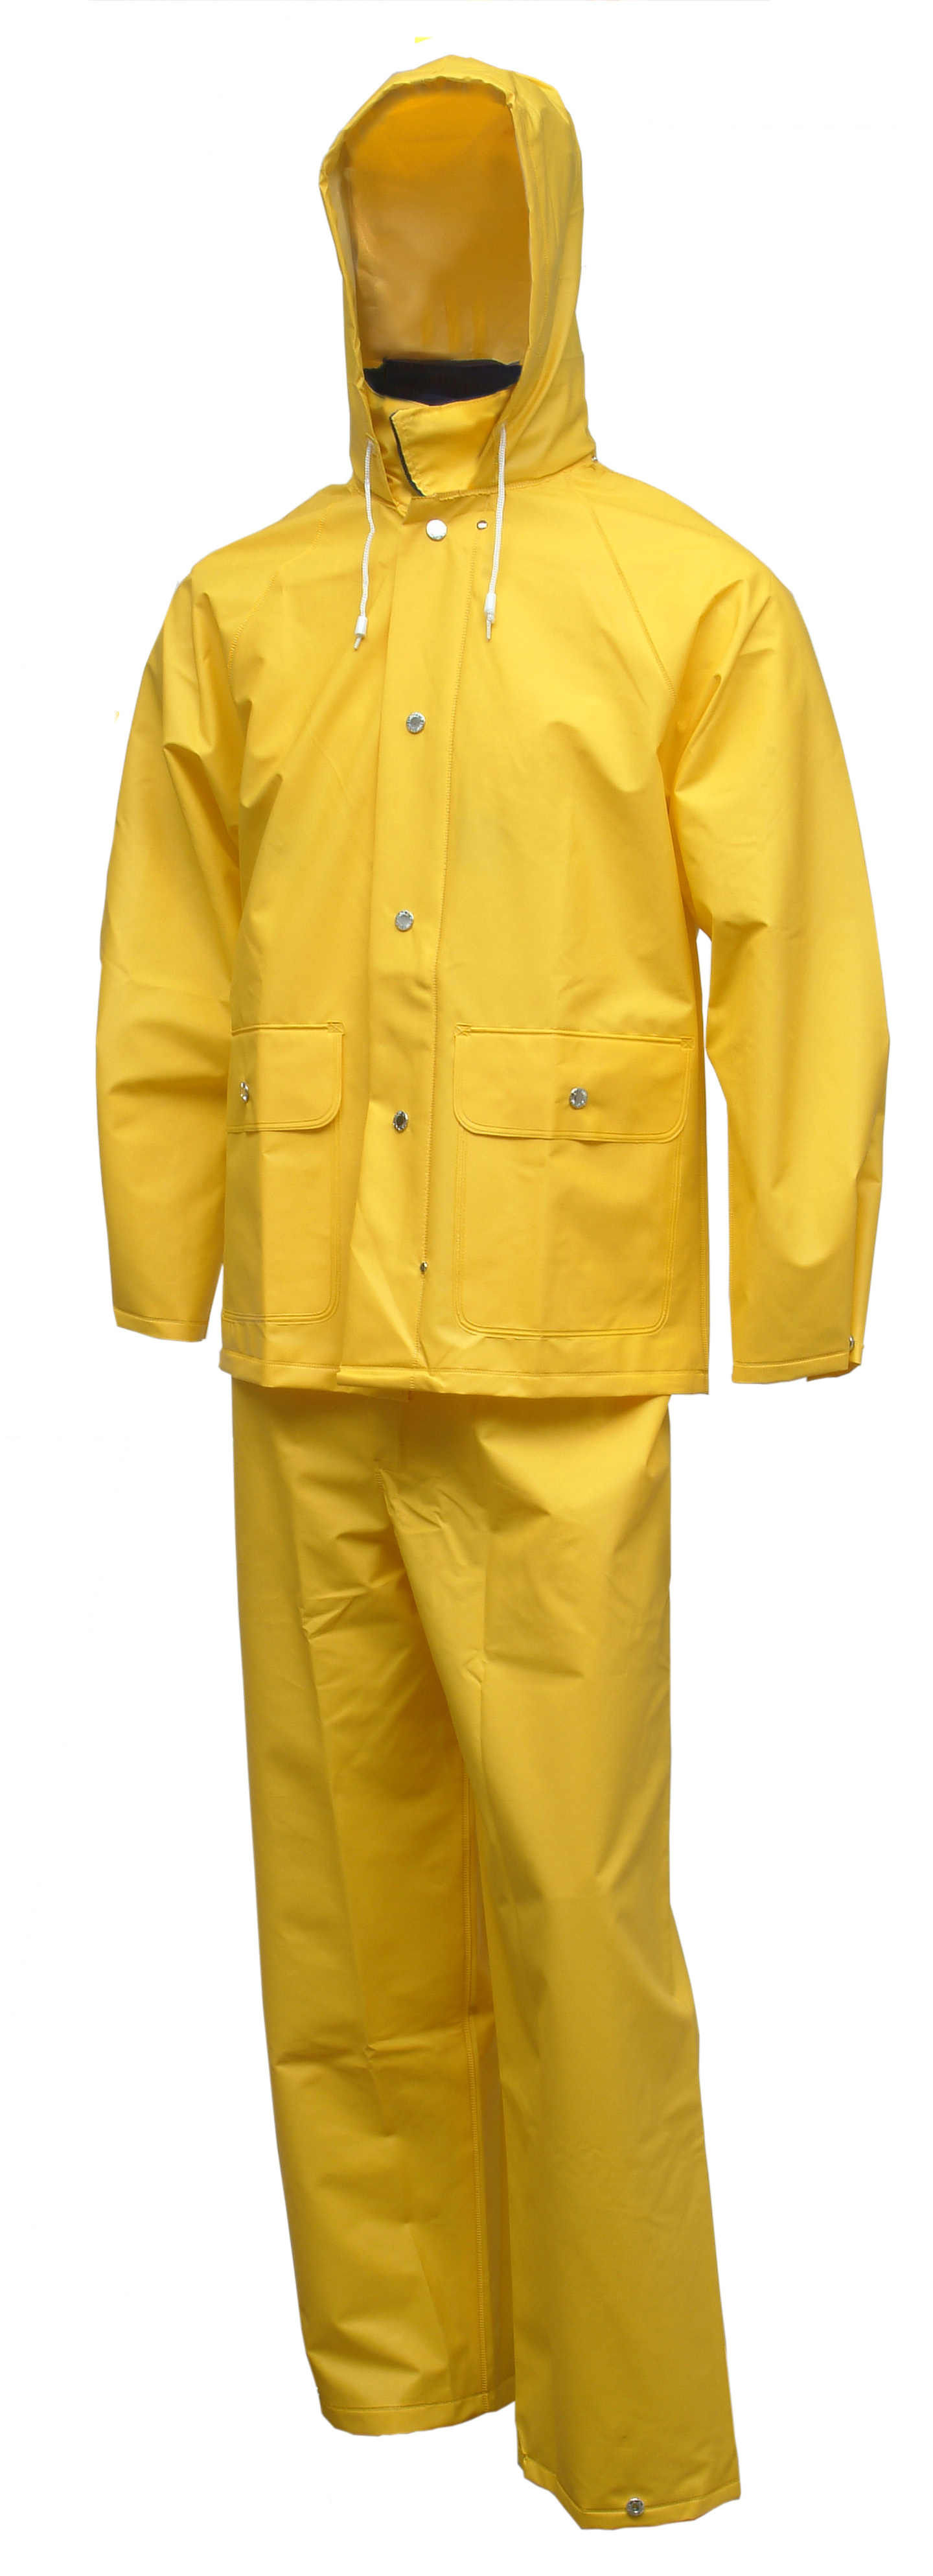 Tingley Industrial 3-Piece Rain Suit